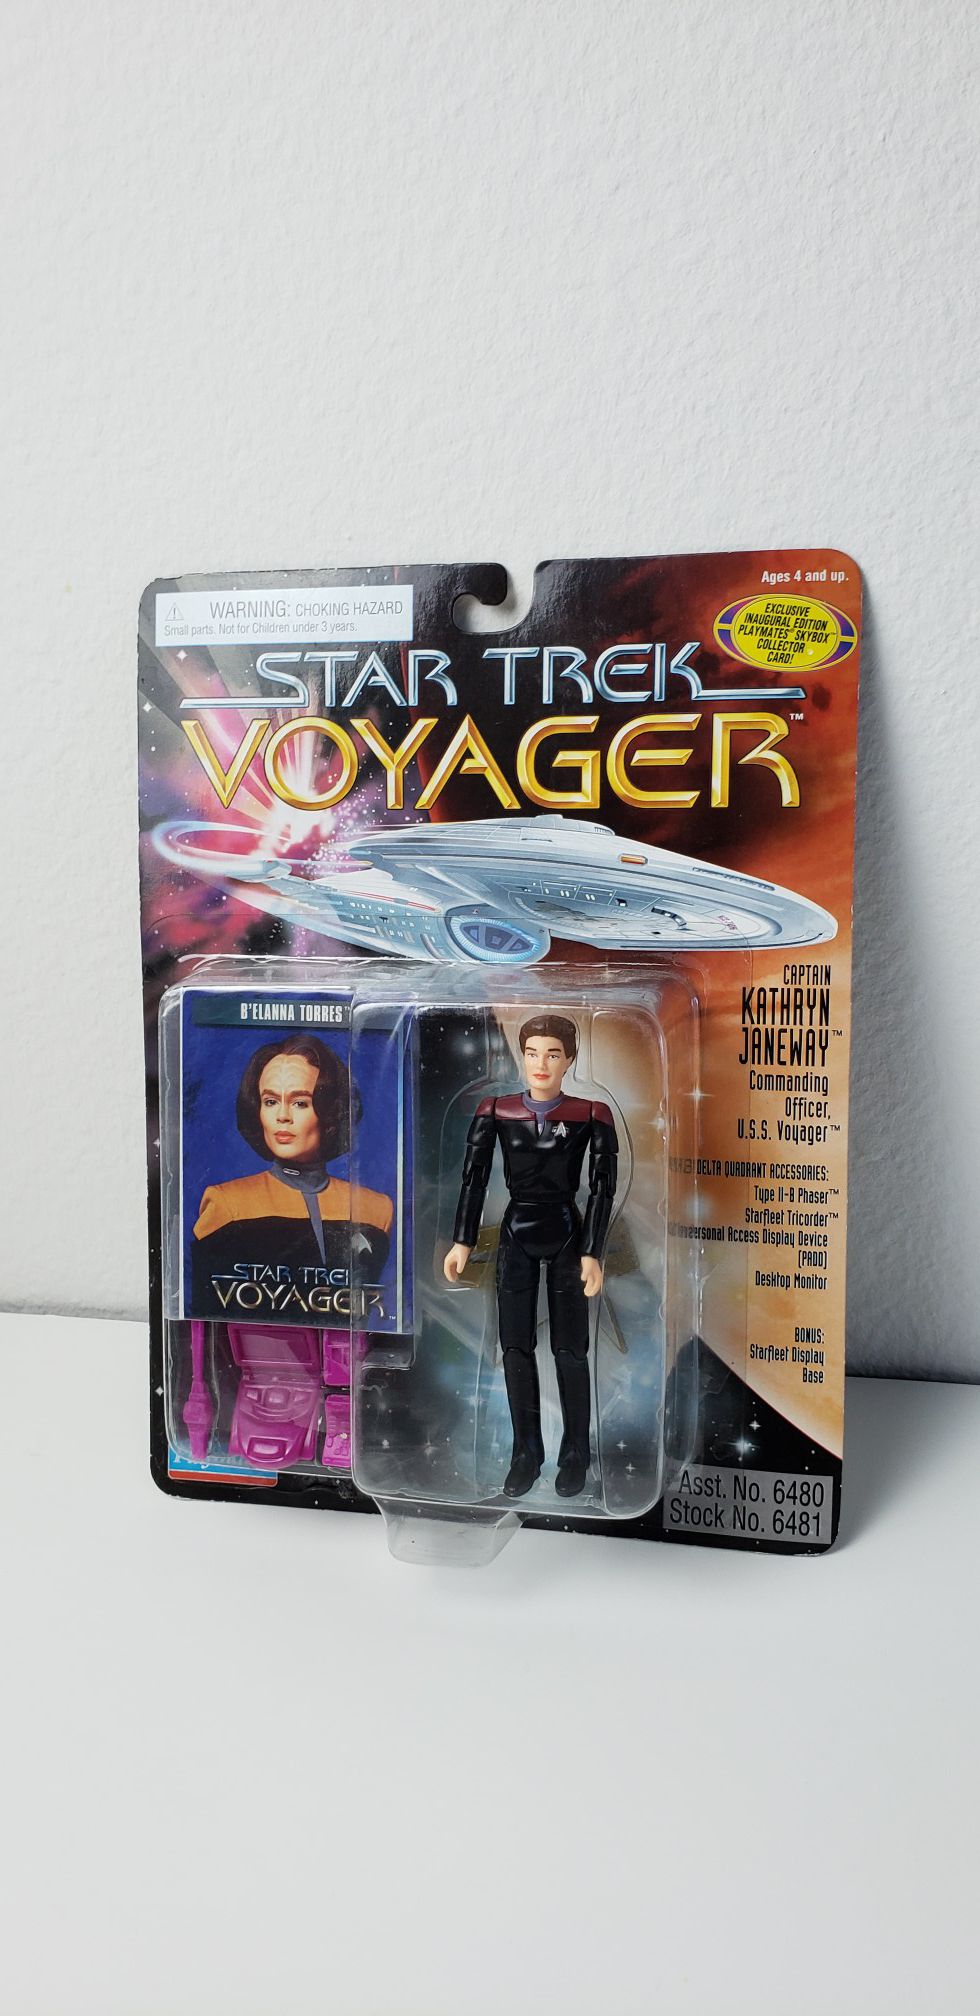 Star Trek Voyager action figure